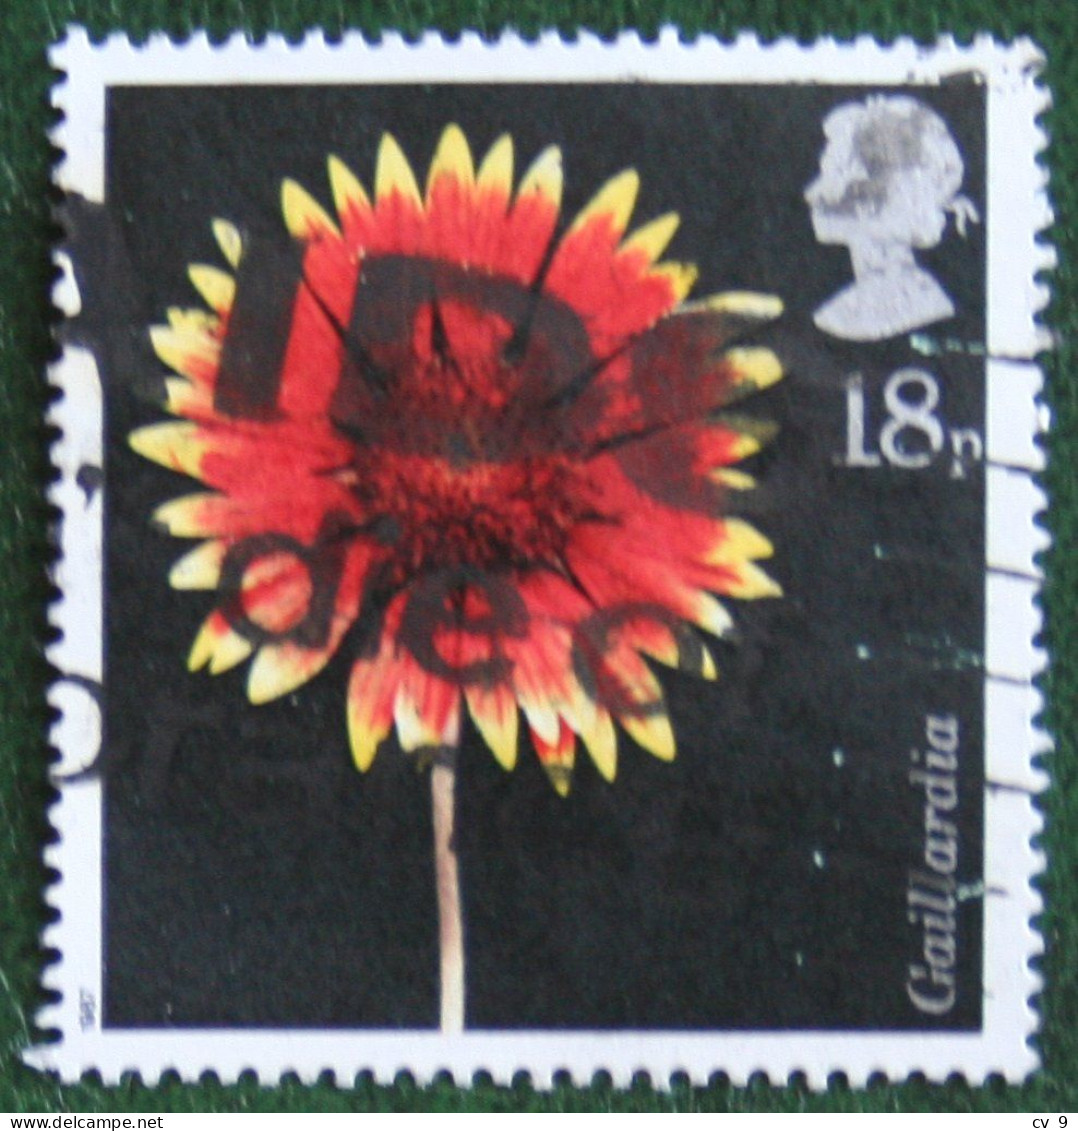 FLOWERS Fleur Blumen (Mi 1097) 1987 Used Gebruikt Oblitere ENGLAND GRANDE-BRETAGNE GB GREAT BRITAIN - Gebraucht